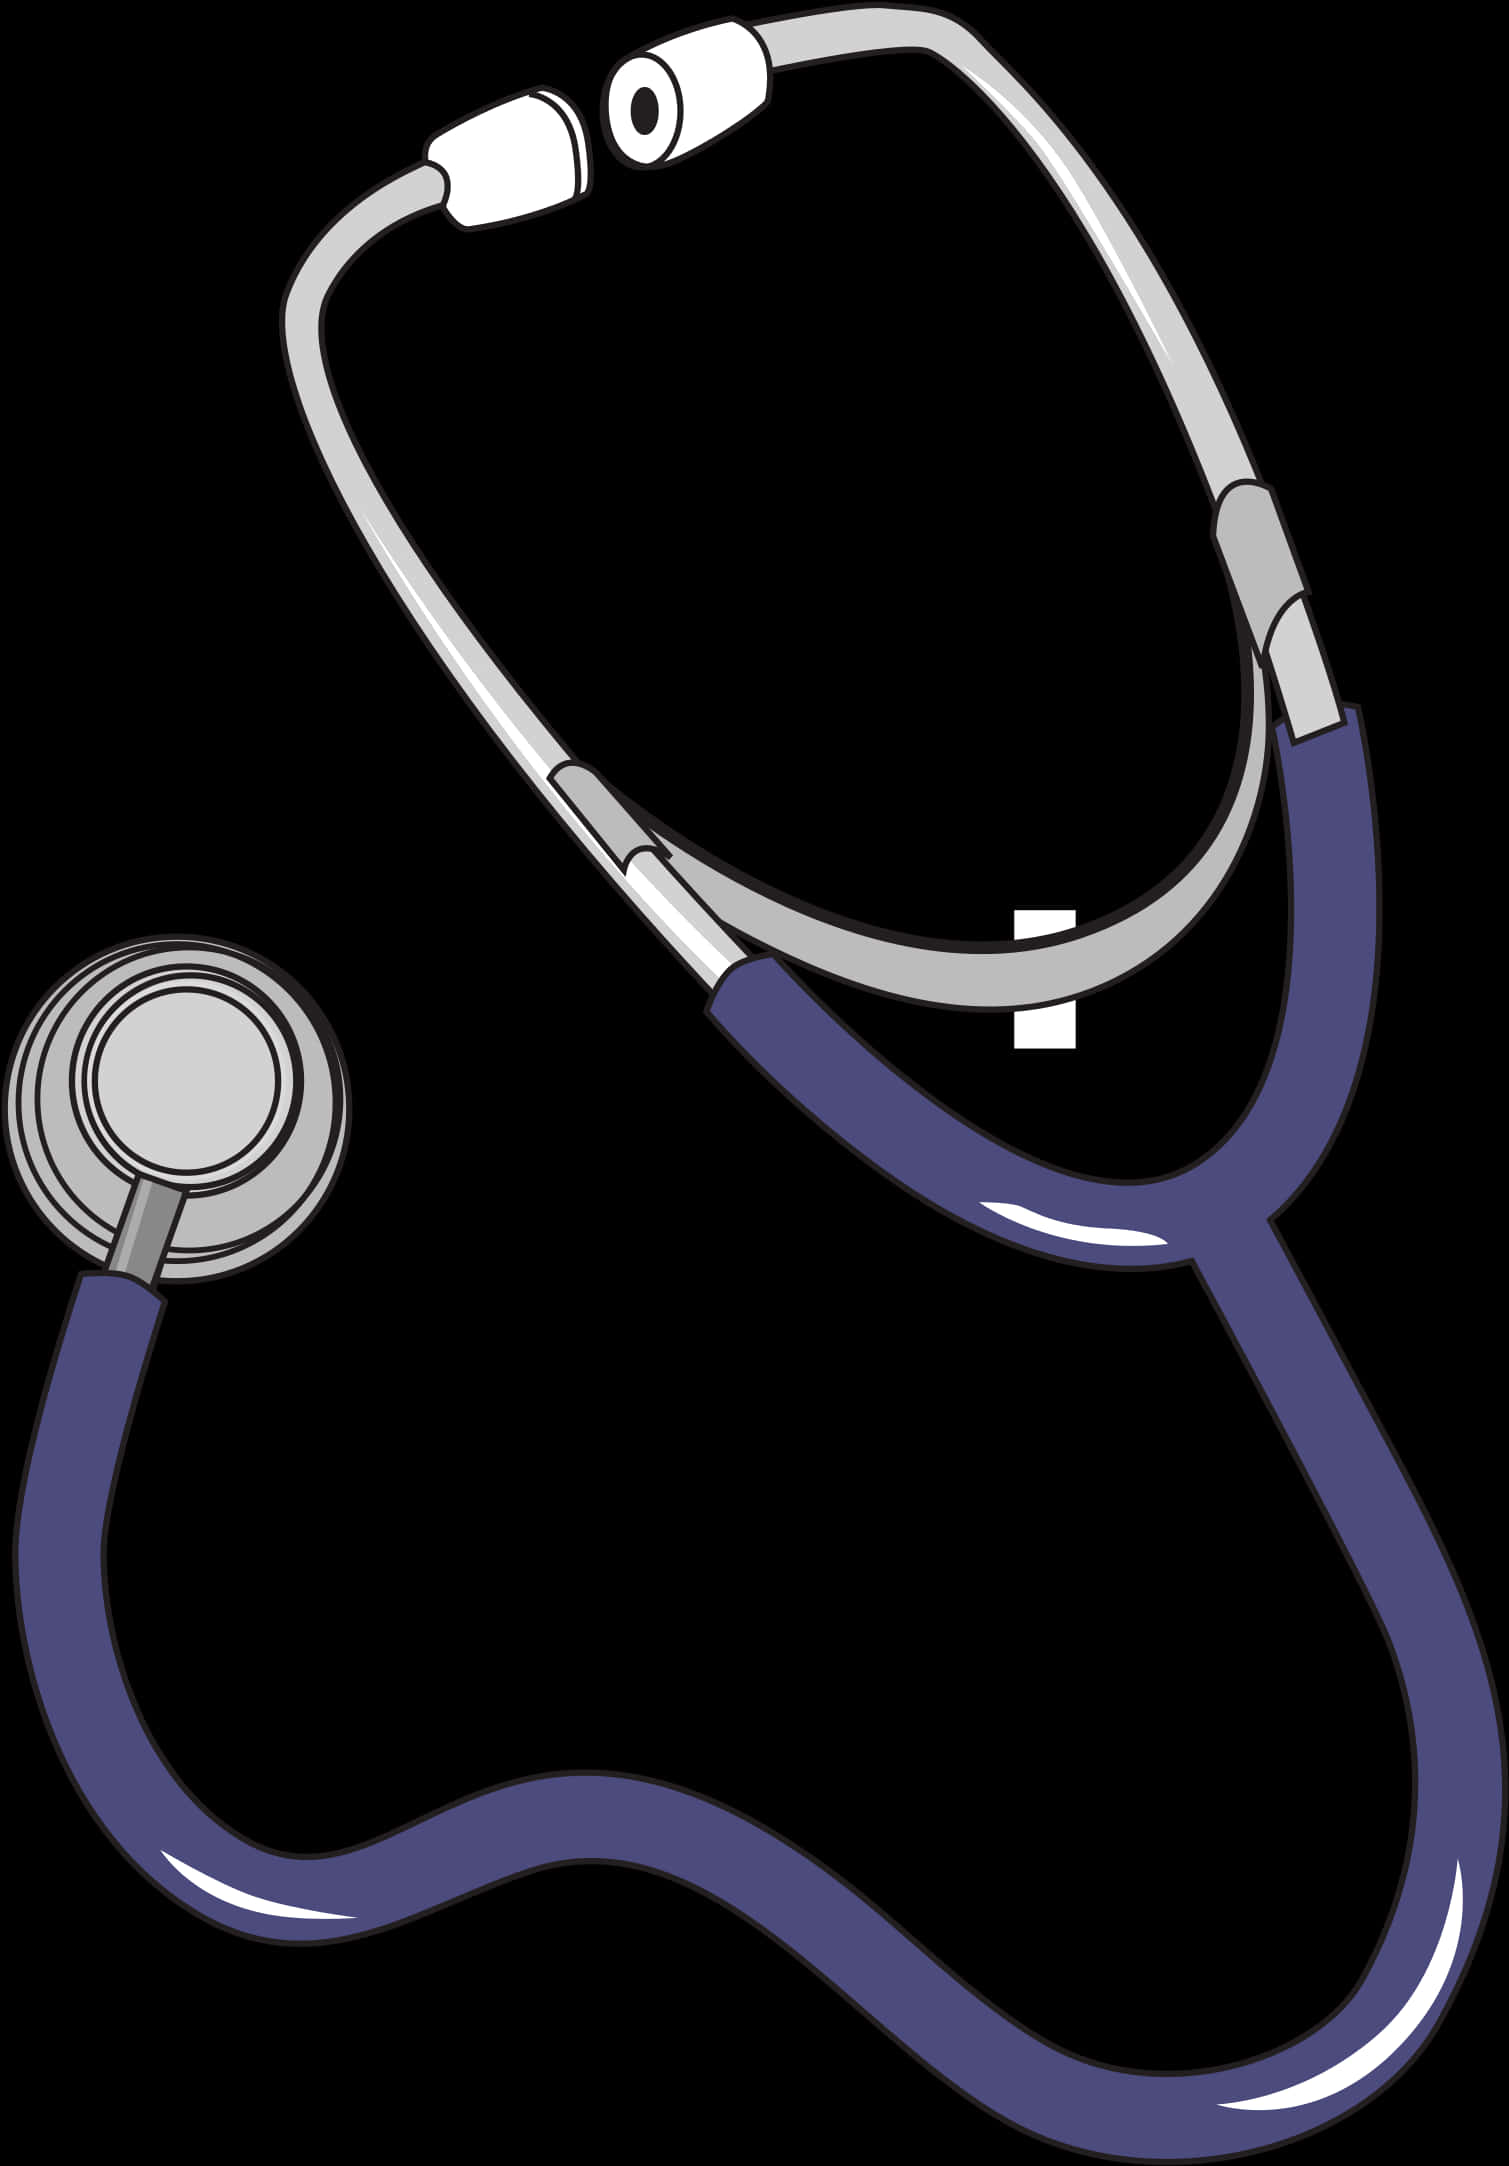 Medical Stethoscope Vector Illustration PNG